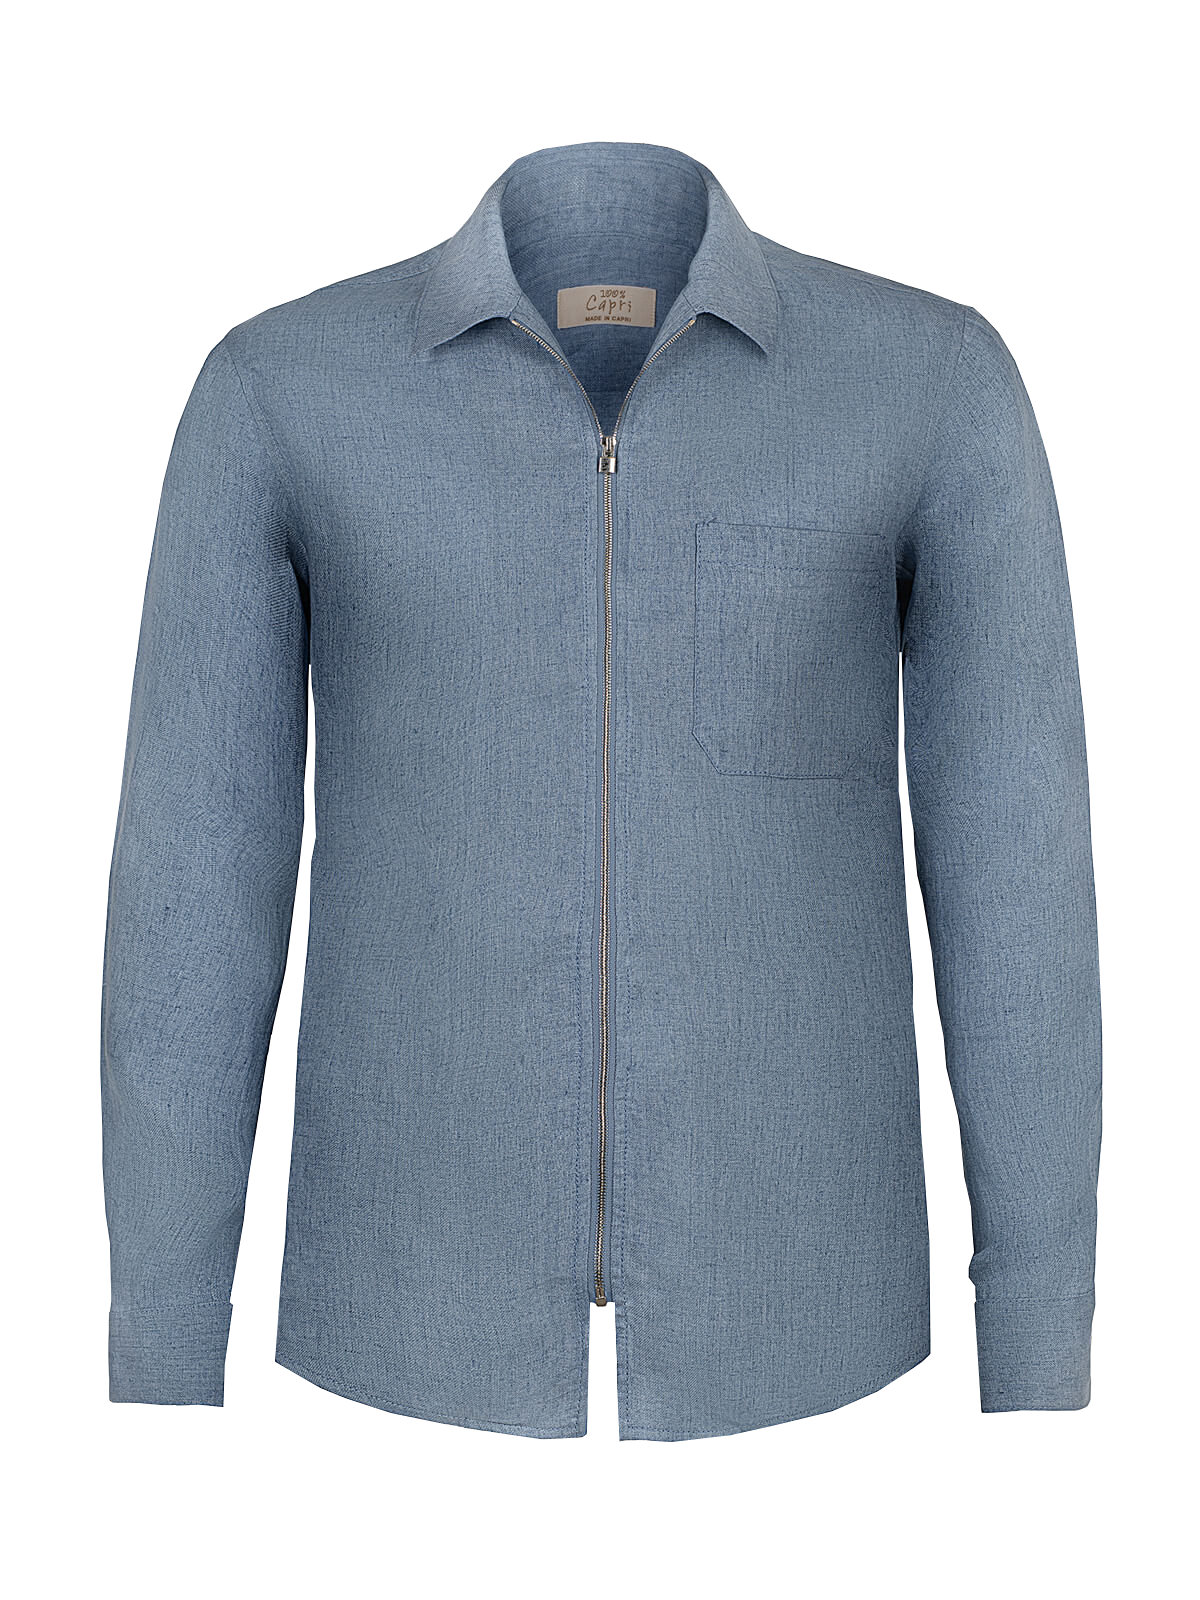 Camicia Zip Malta 100% Capri for man linen jeans shirt front